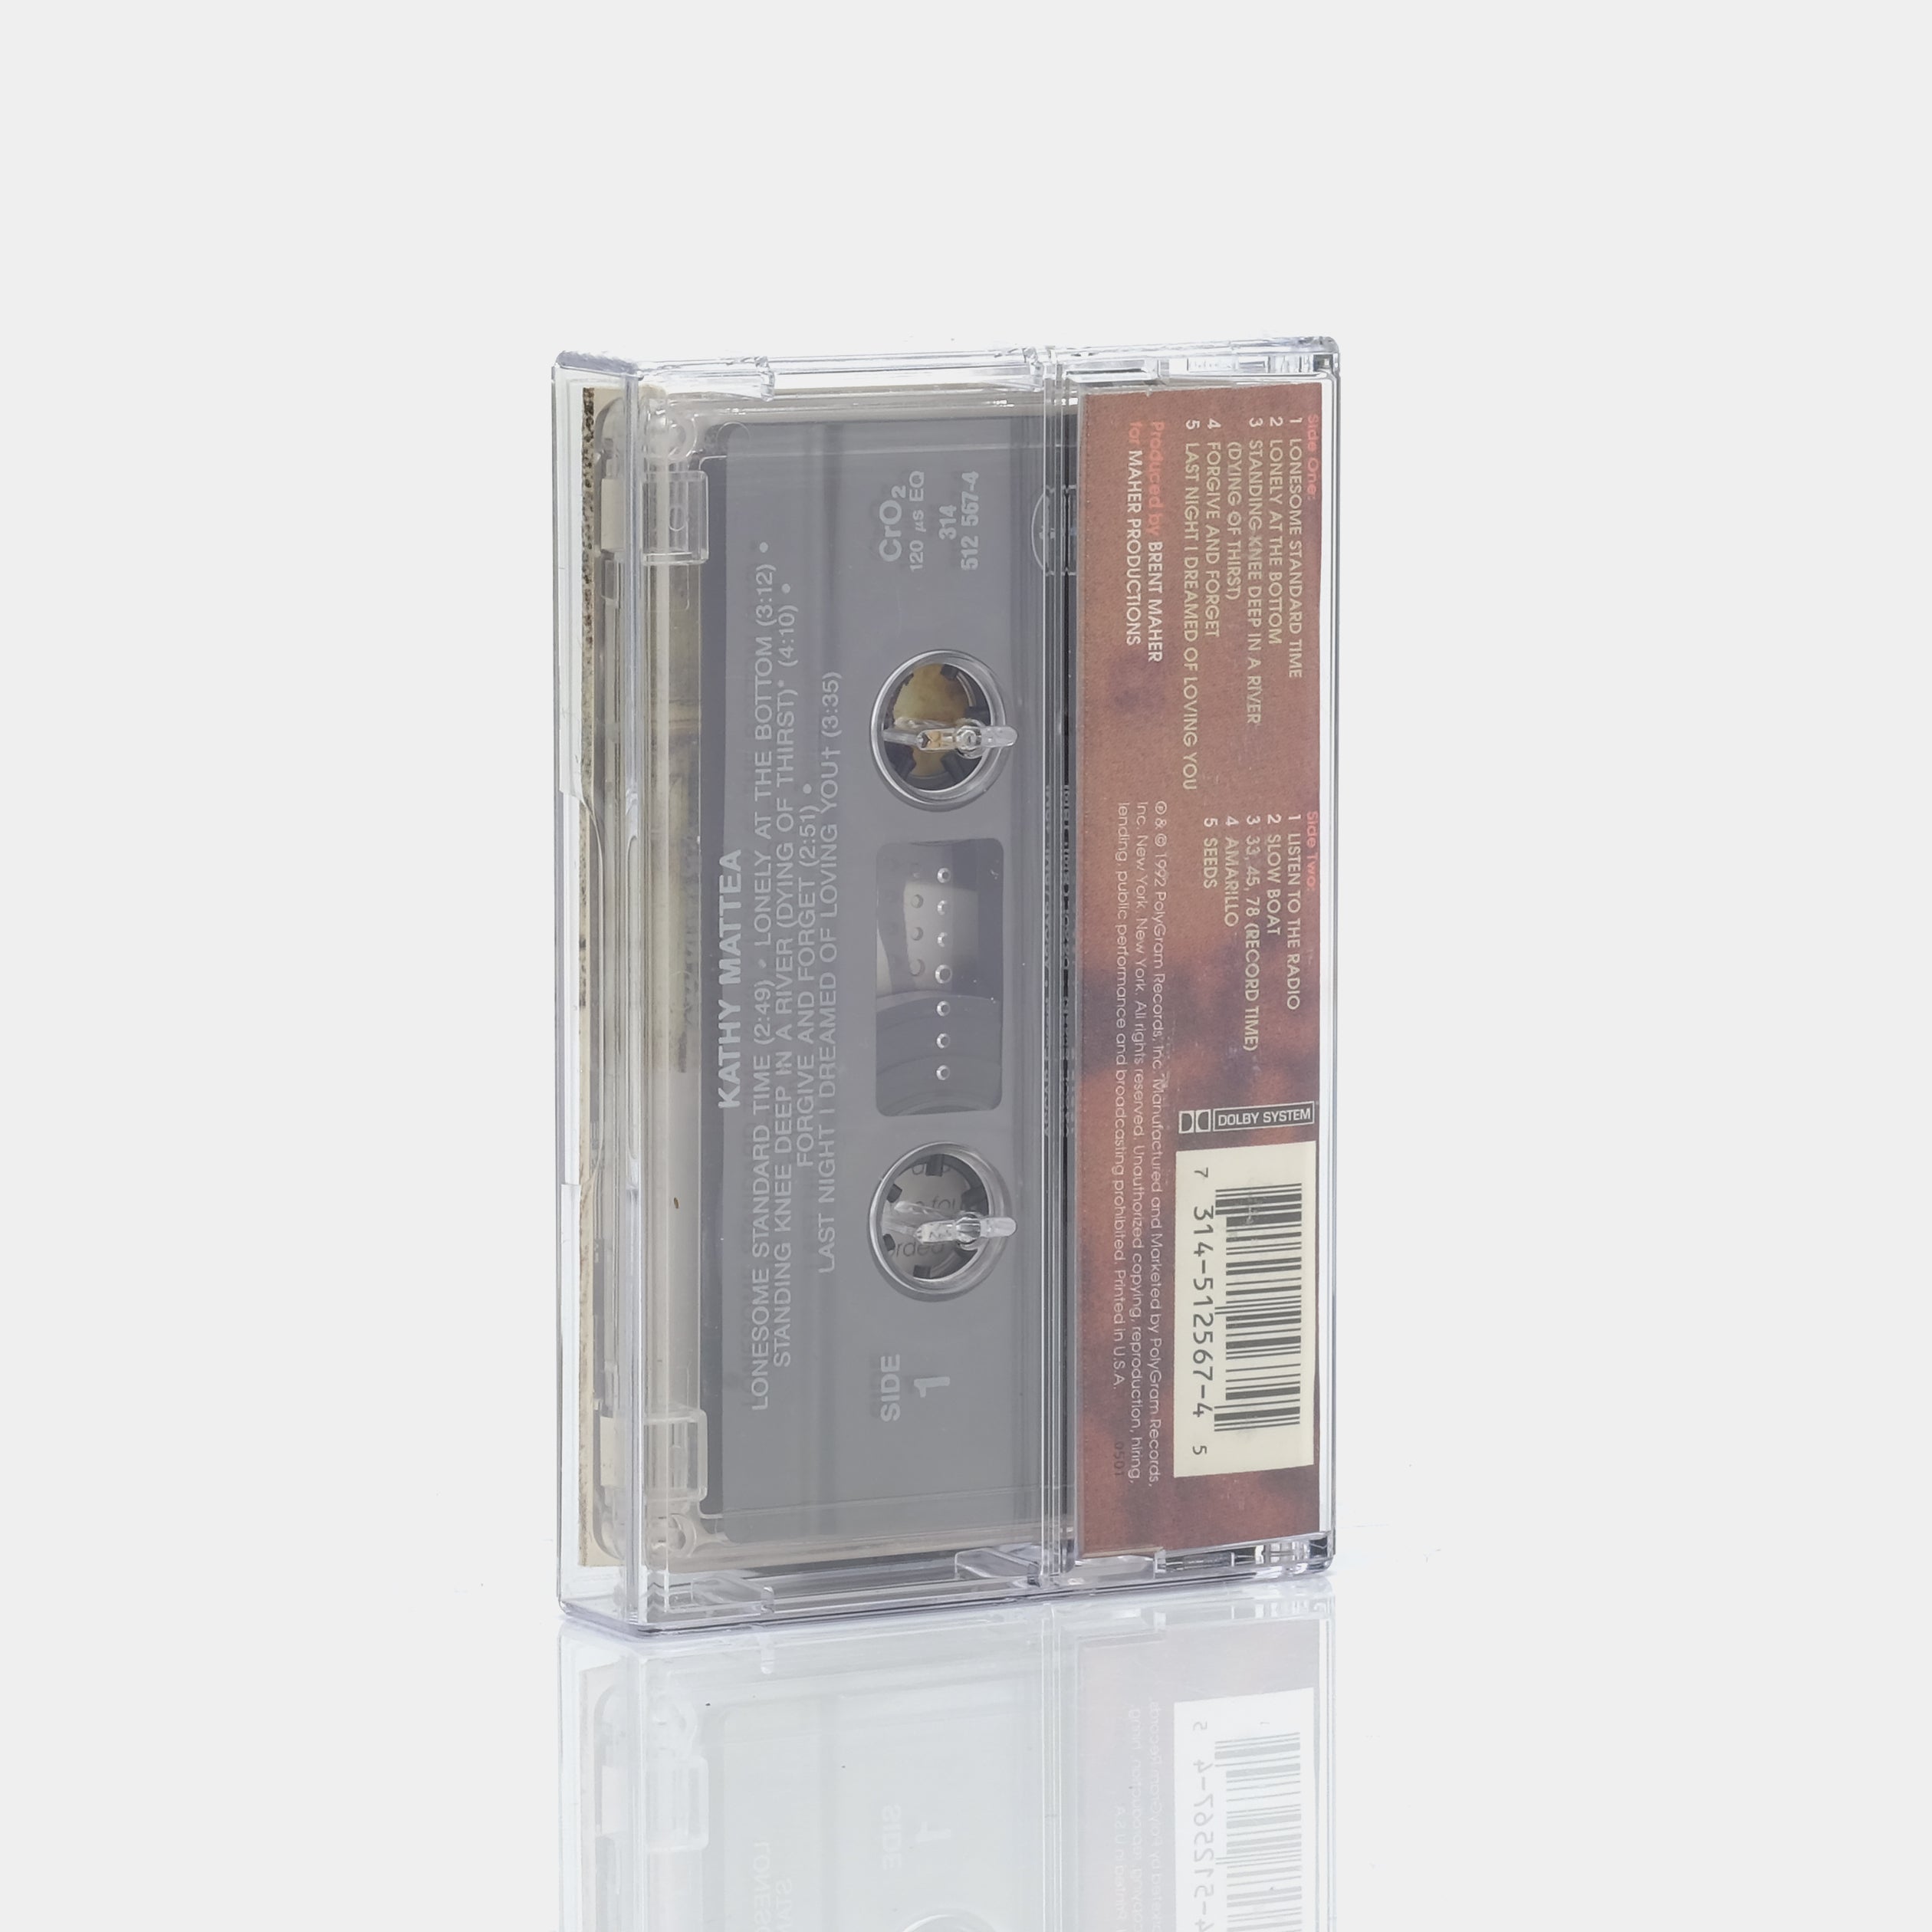 Kathy Mattea - Lonesome Standard Time Cassette Tape